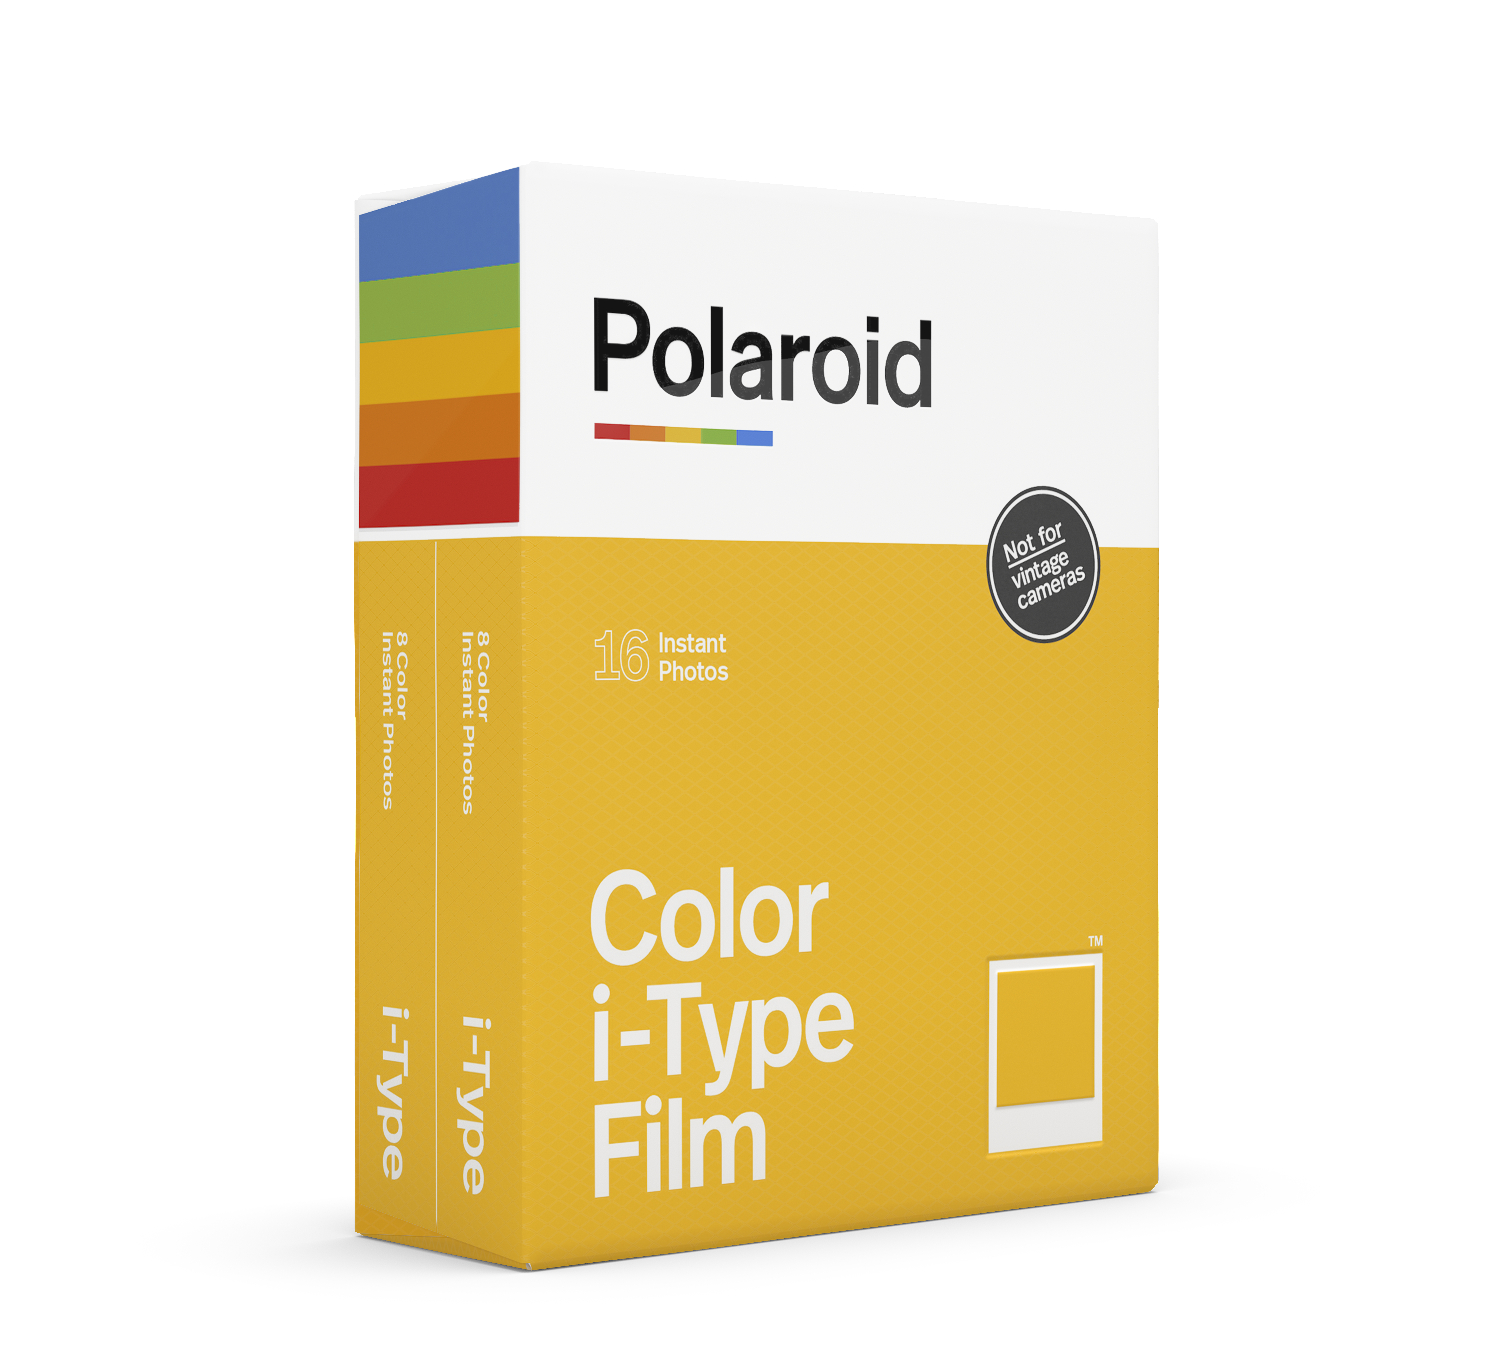 POLAROID Sofortbildfilm Farbe - für Rahmen Doppelpack Sofortbildfilm i-Type weißer